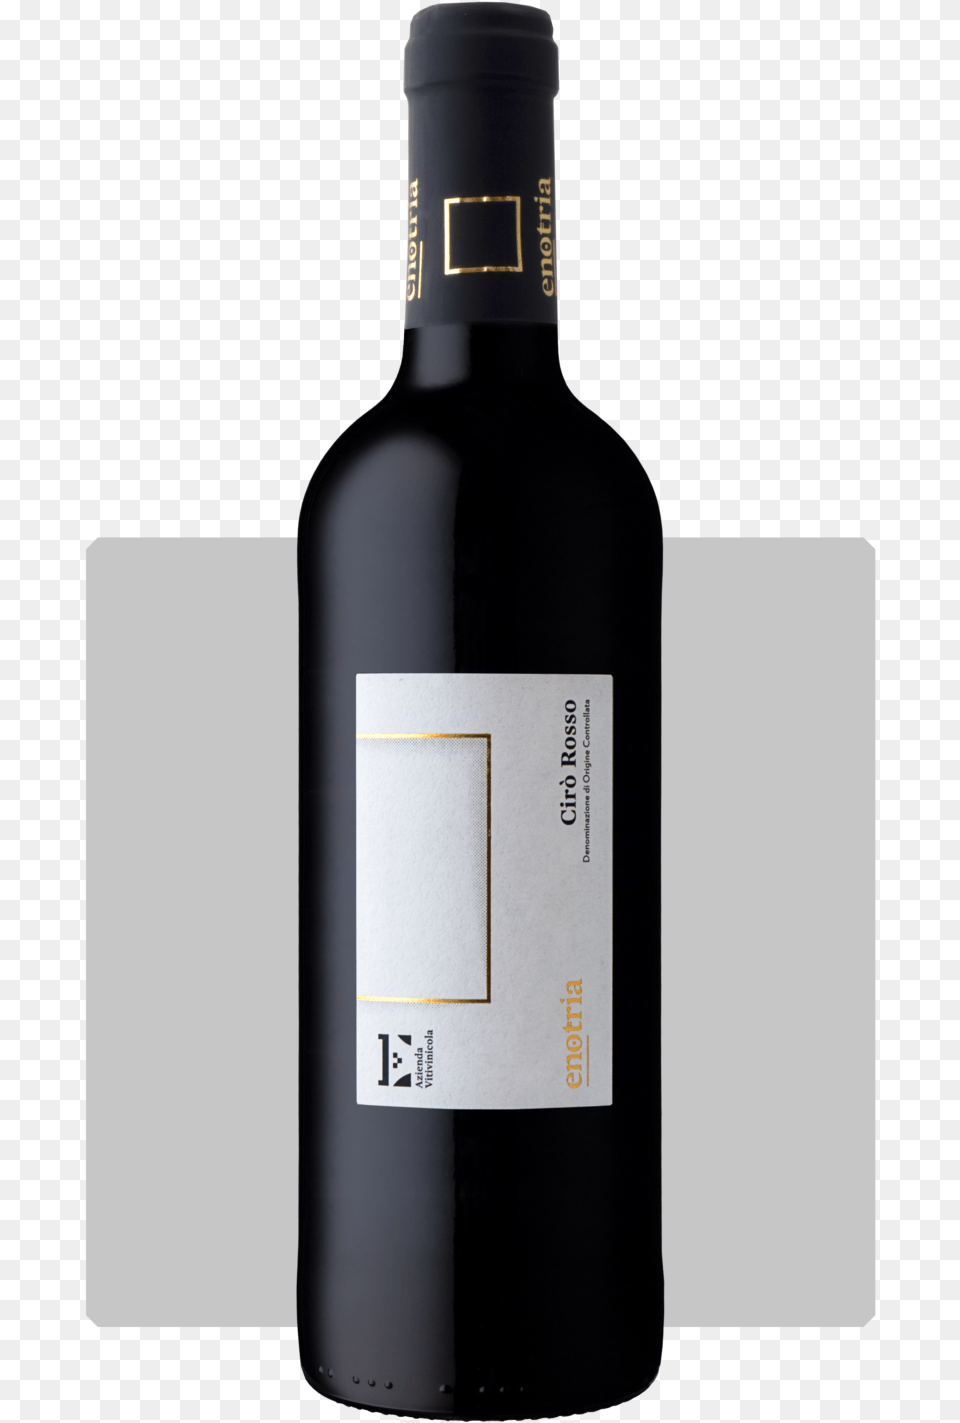 Wine Bottle Wine Bottle, Alcohol, Liquor, Beverage, Wine Bottle Png Image